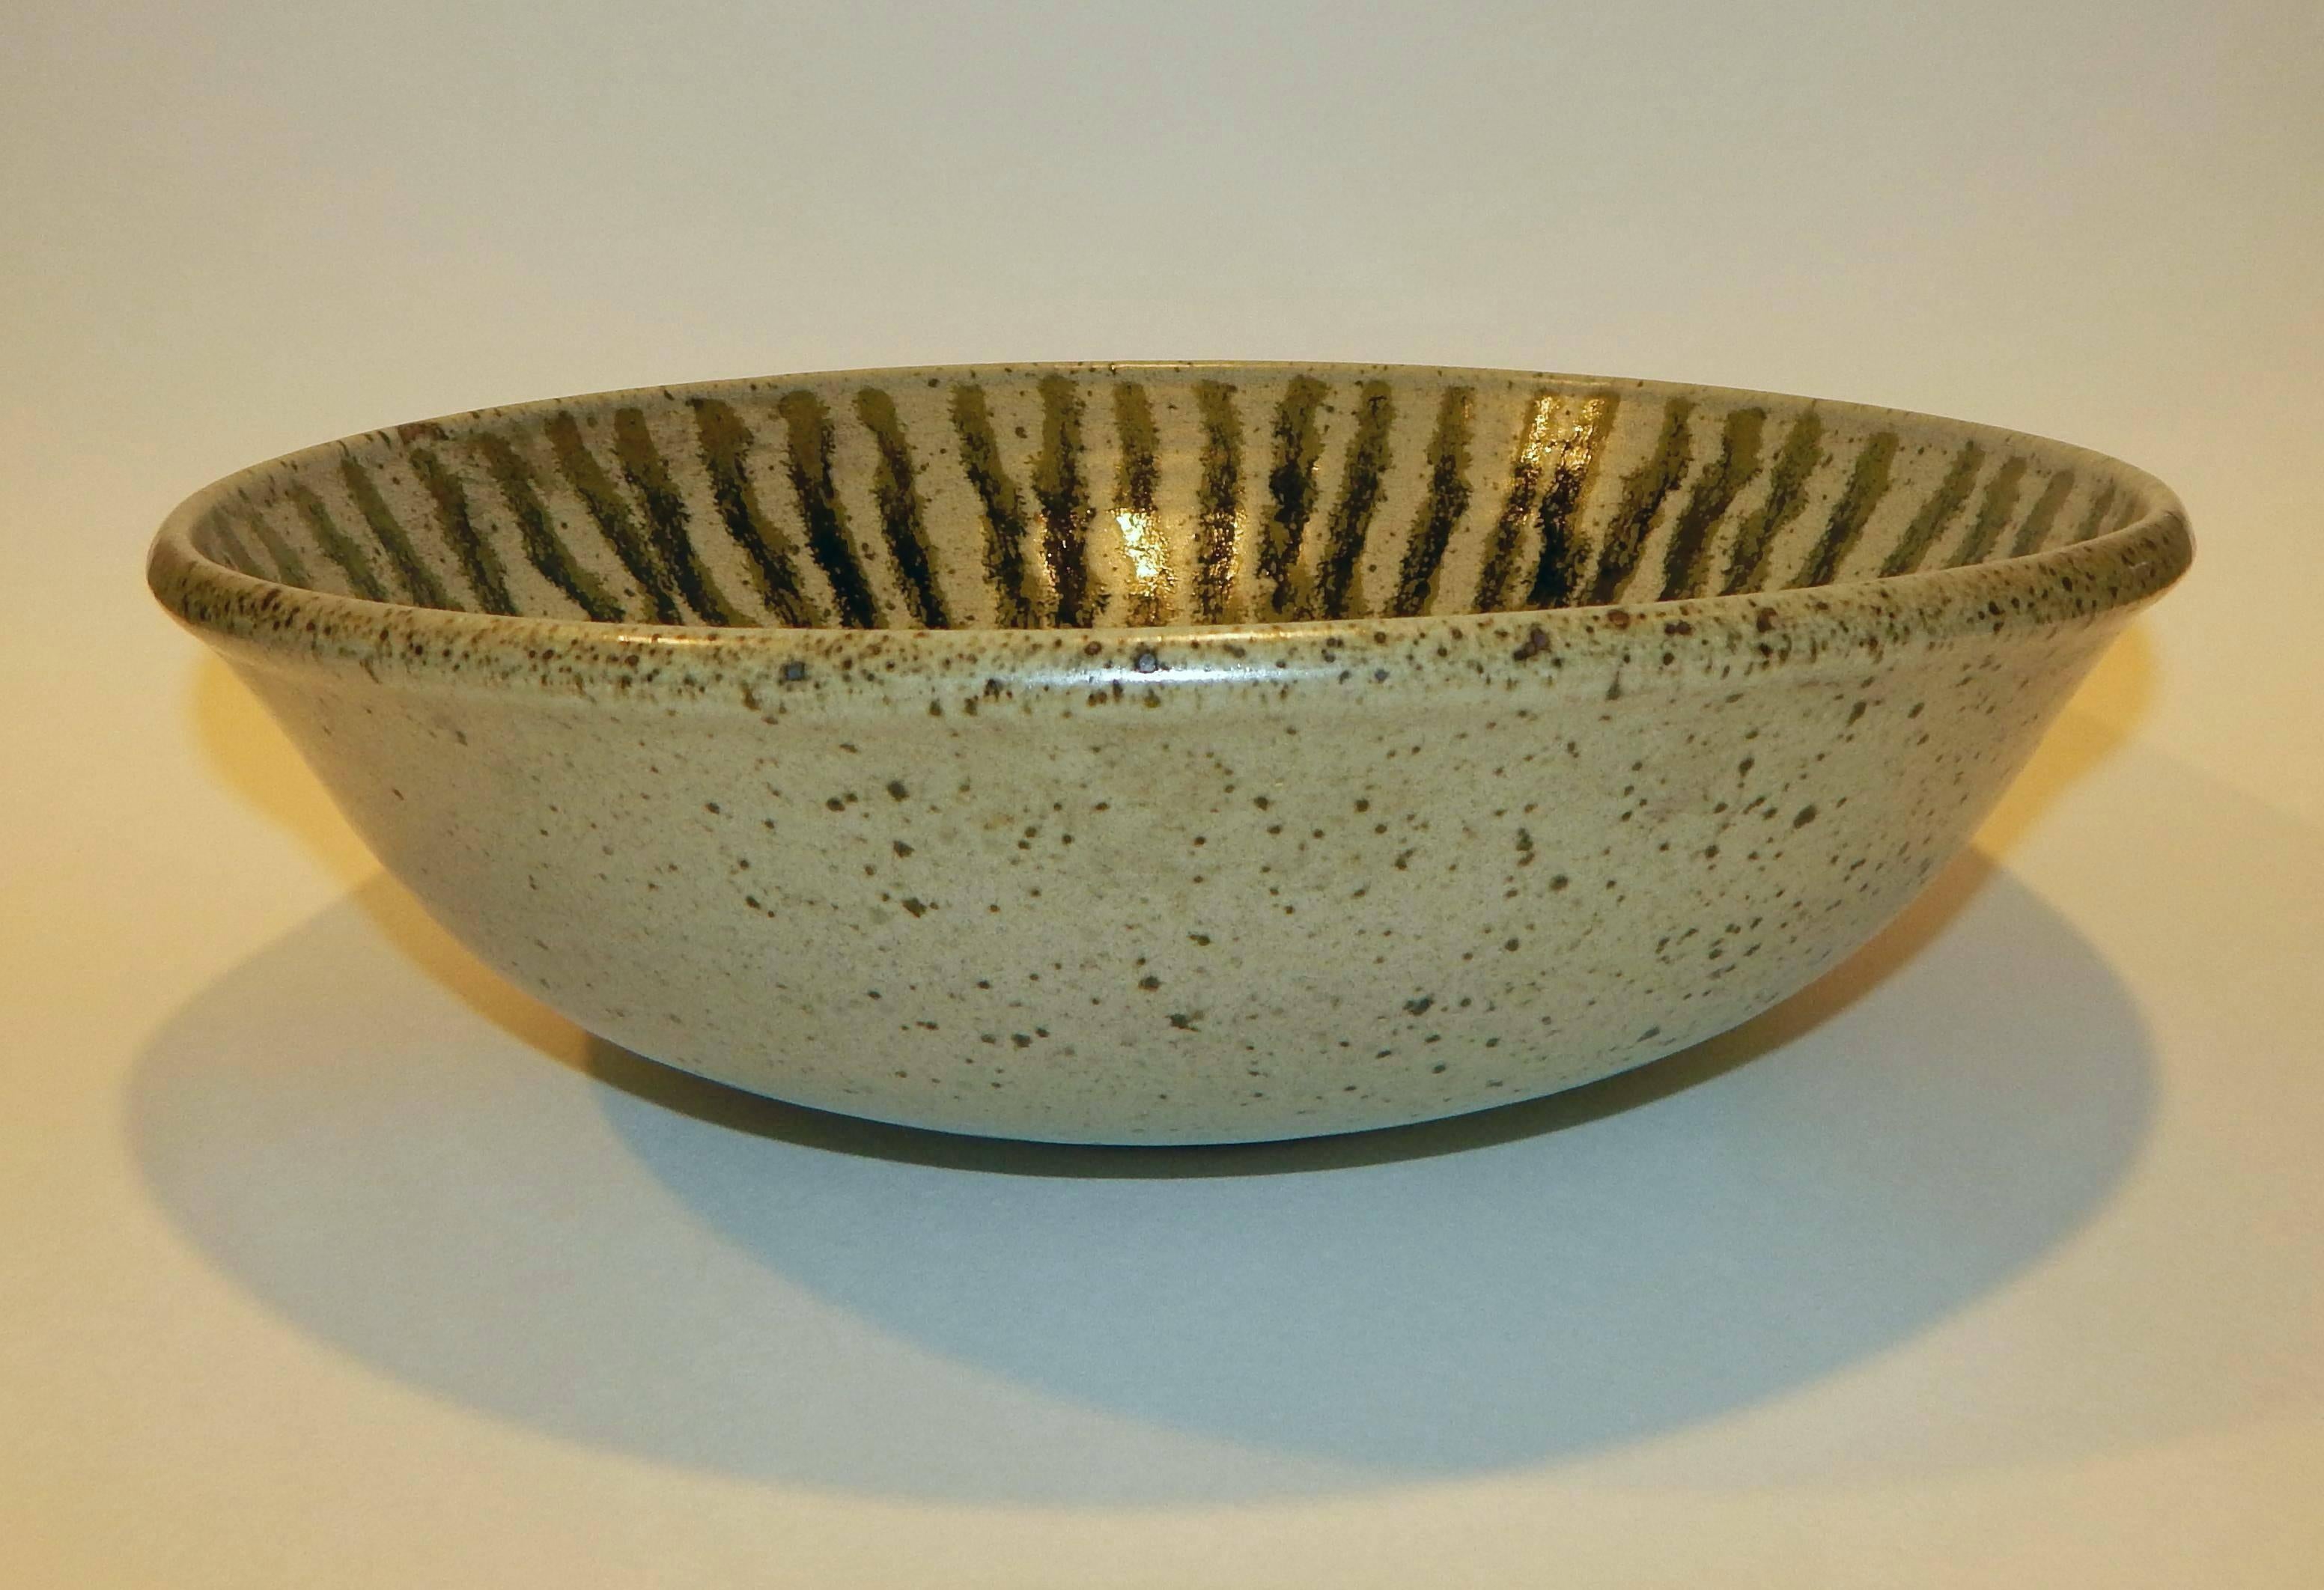 Antonio Prieto (1912-1967) wonderful studio bowl. Signed on the bottom: Prieto.
In excellent condition. Measures: 4